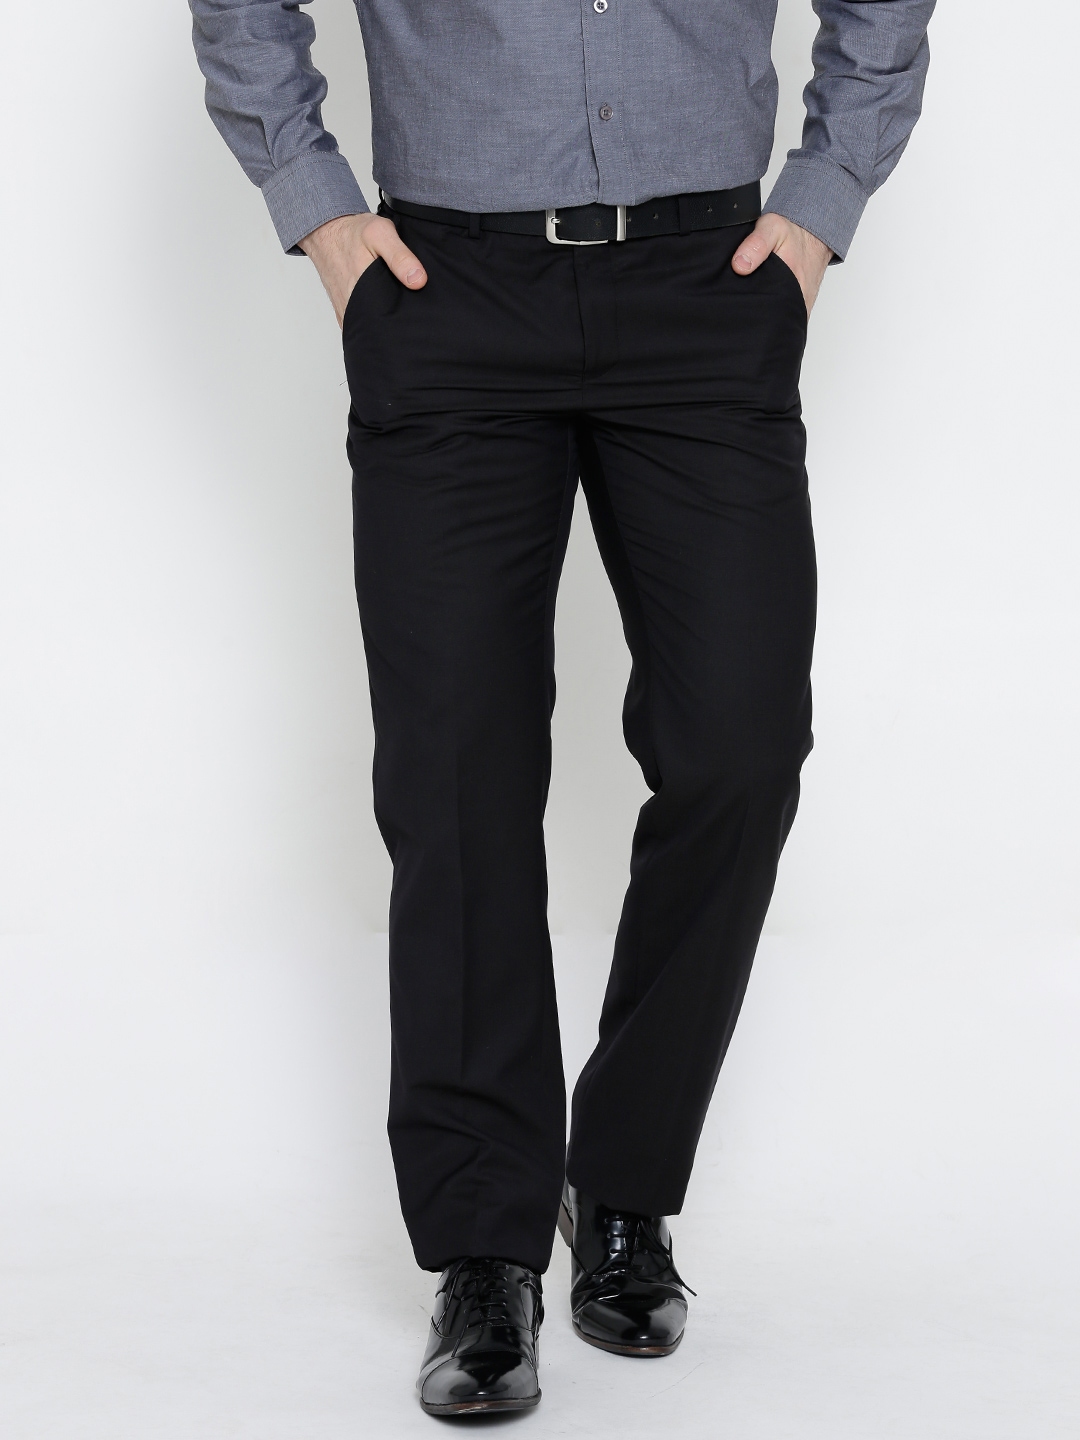 Regular Fit Mens Trousers  Buy Regular Fit Mens Trousers Online at Best  Prices in India  Flipkartcom